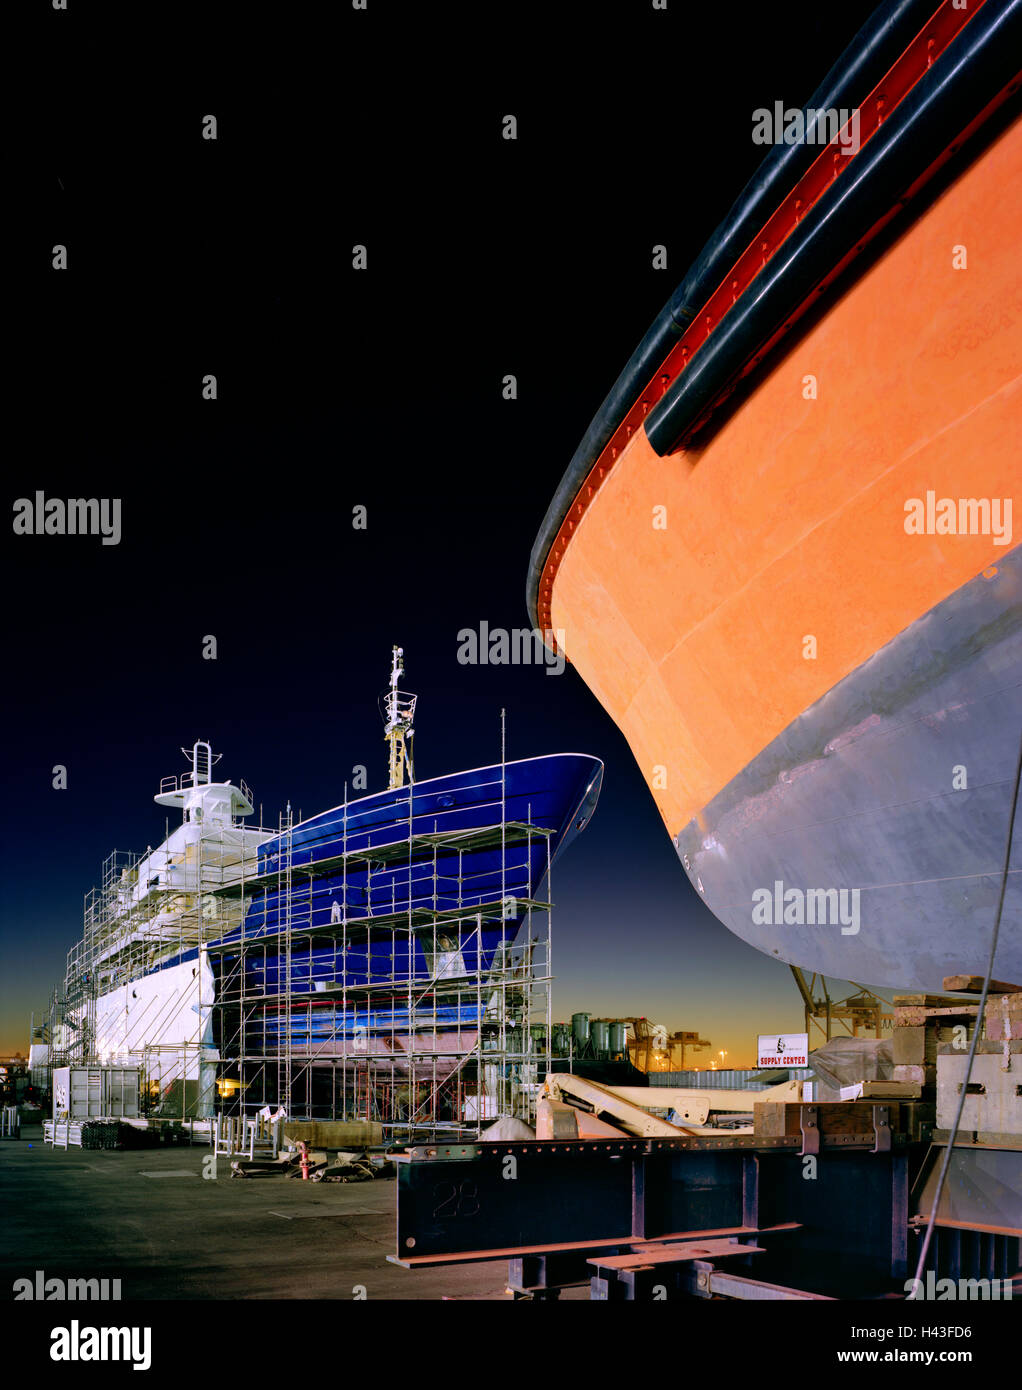 Scaffolding on ship in shipyard Stock Photo